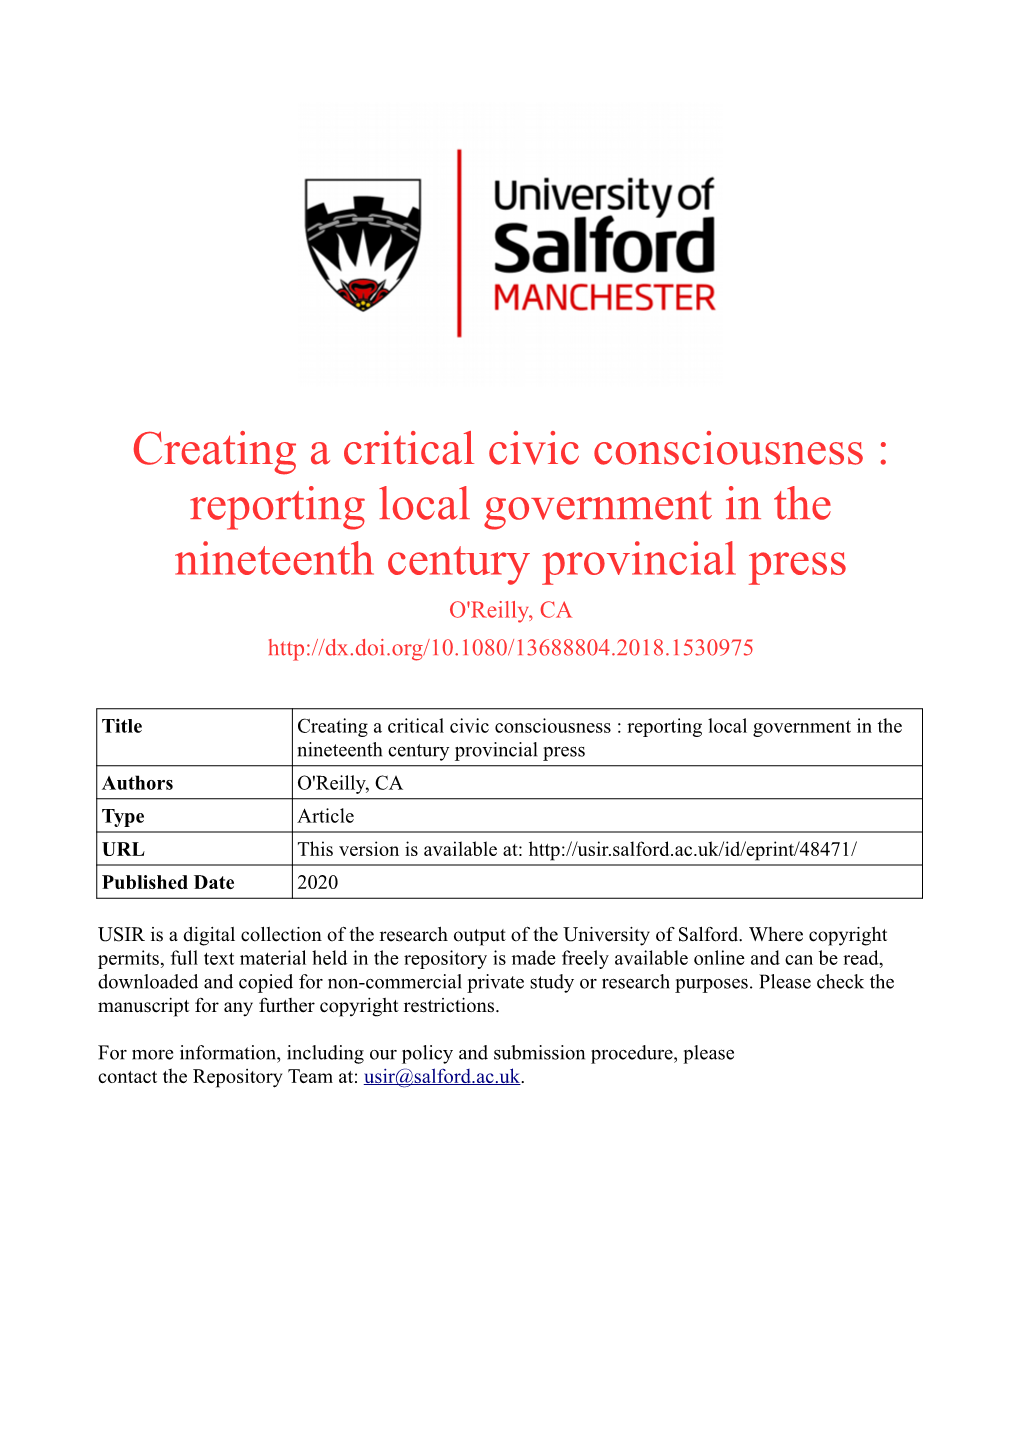 Creating a Critical Civic Consciousness